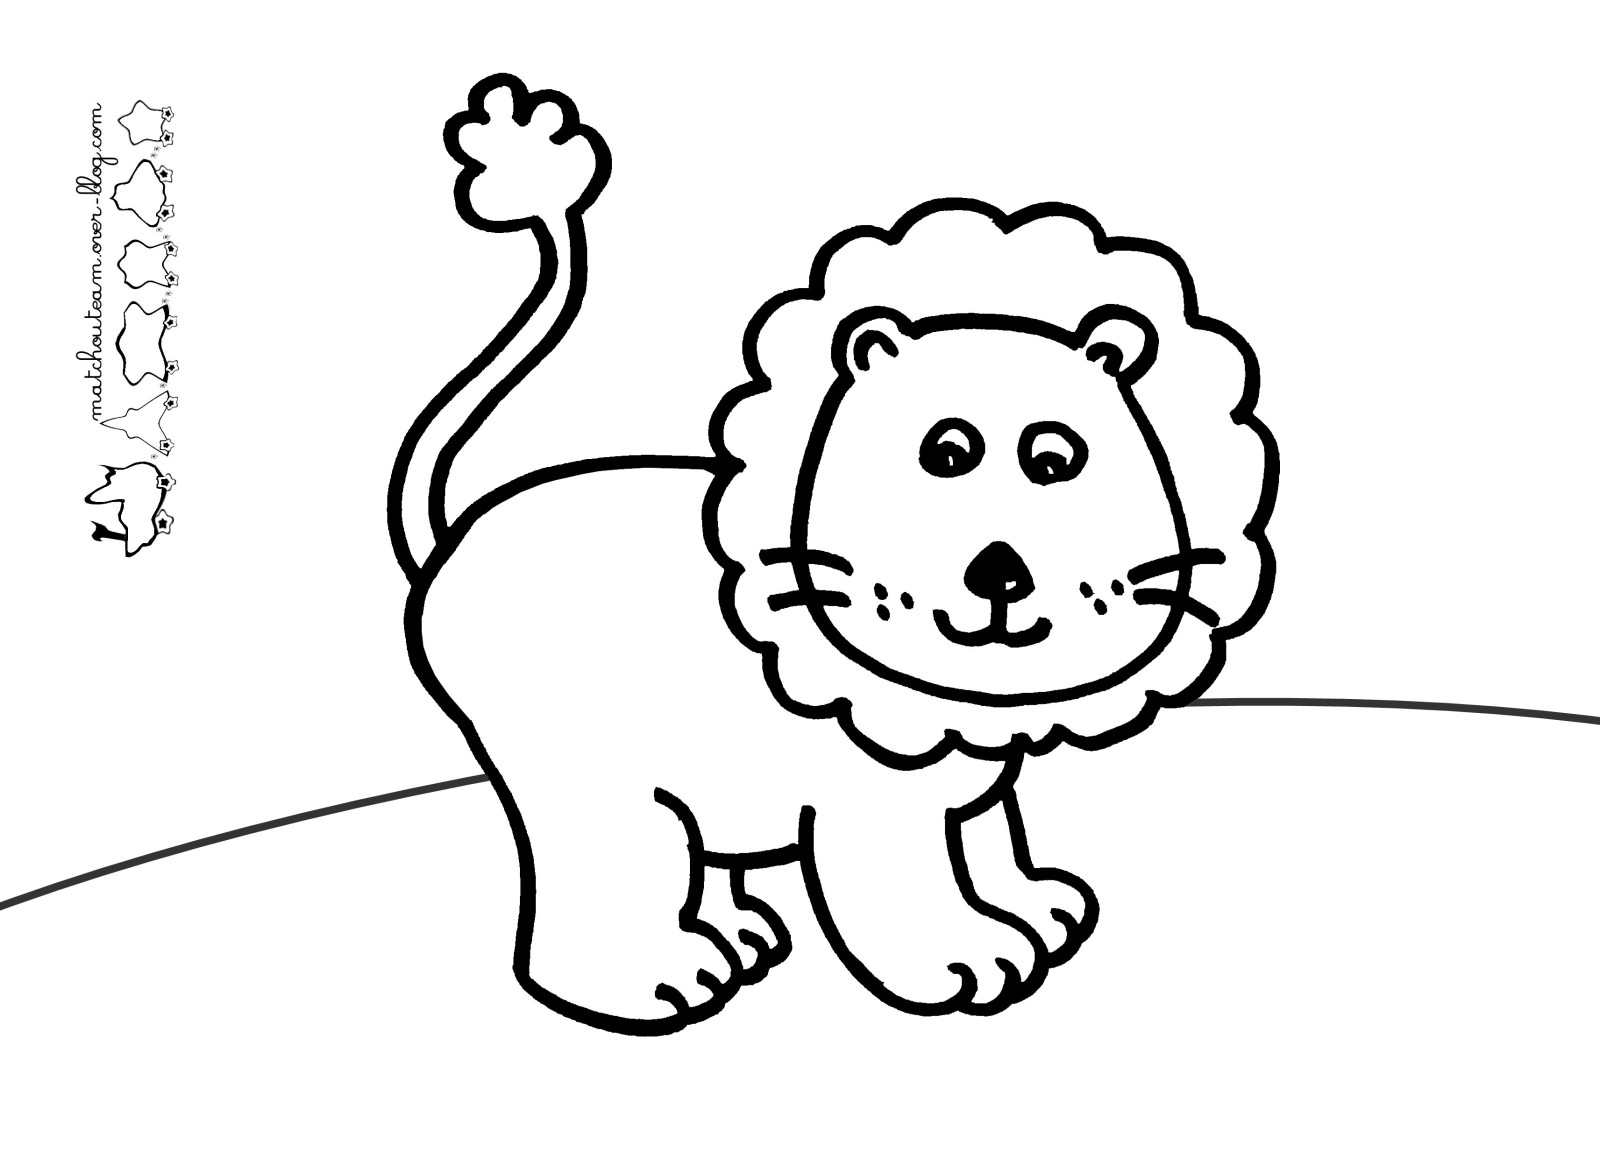 Lion dessin facile